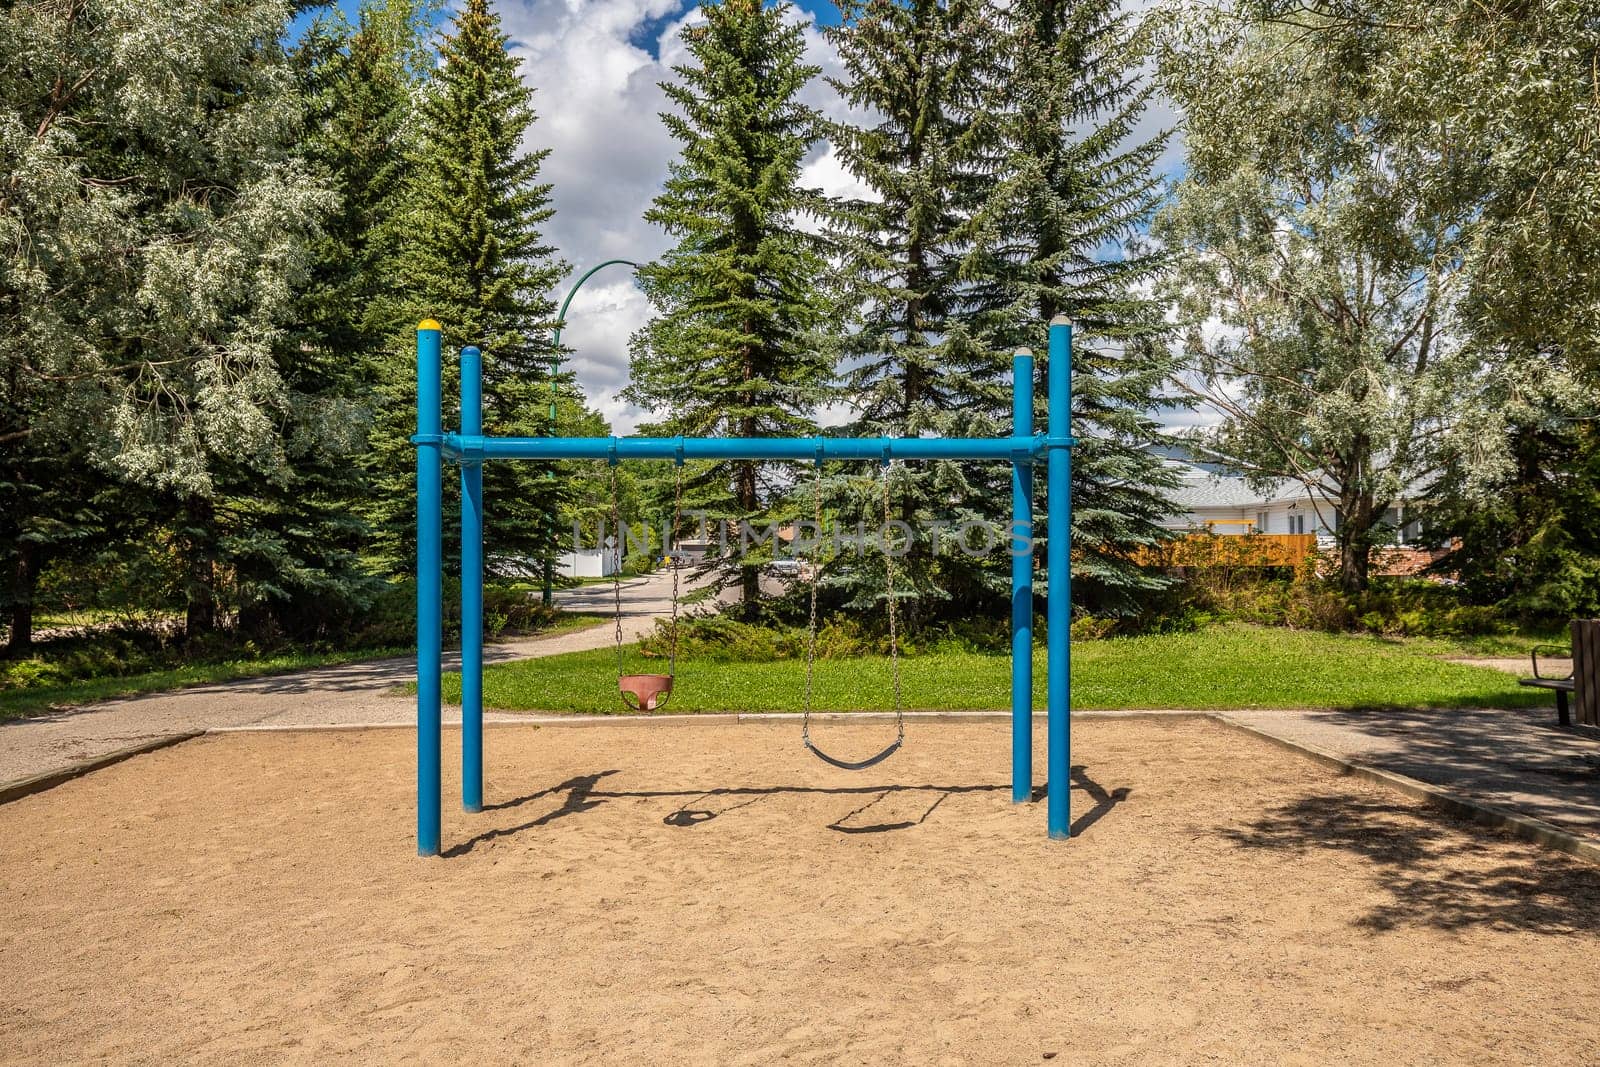 Meadowlark Park is located in the Adelaide Churchill neighborhood of Saskatoon.